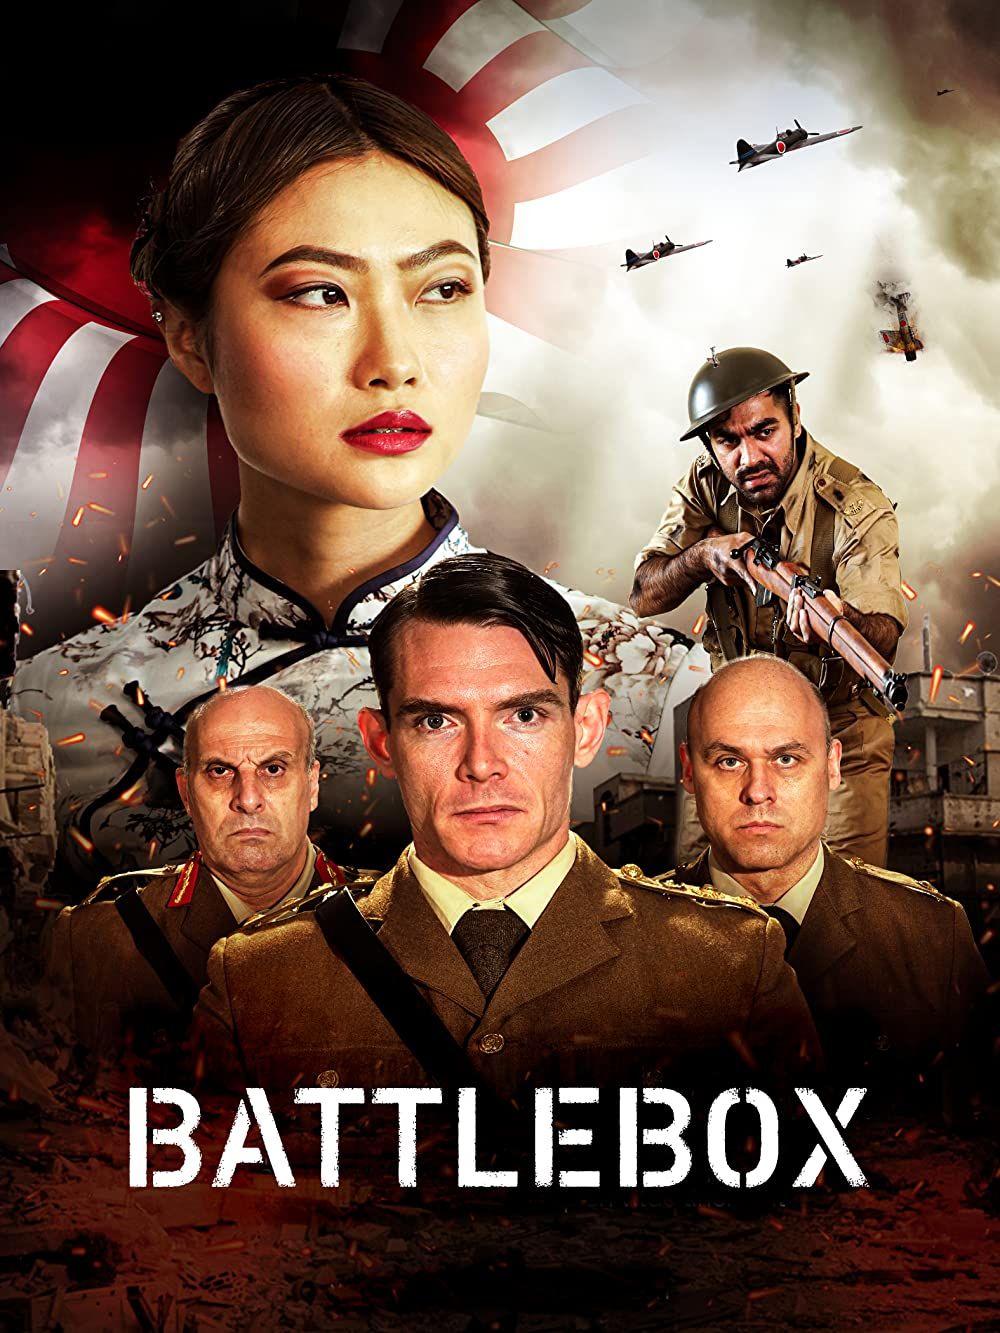 Battlebox (2023) English HDRip download full movie